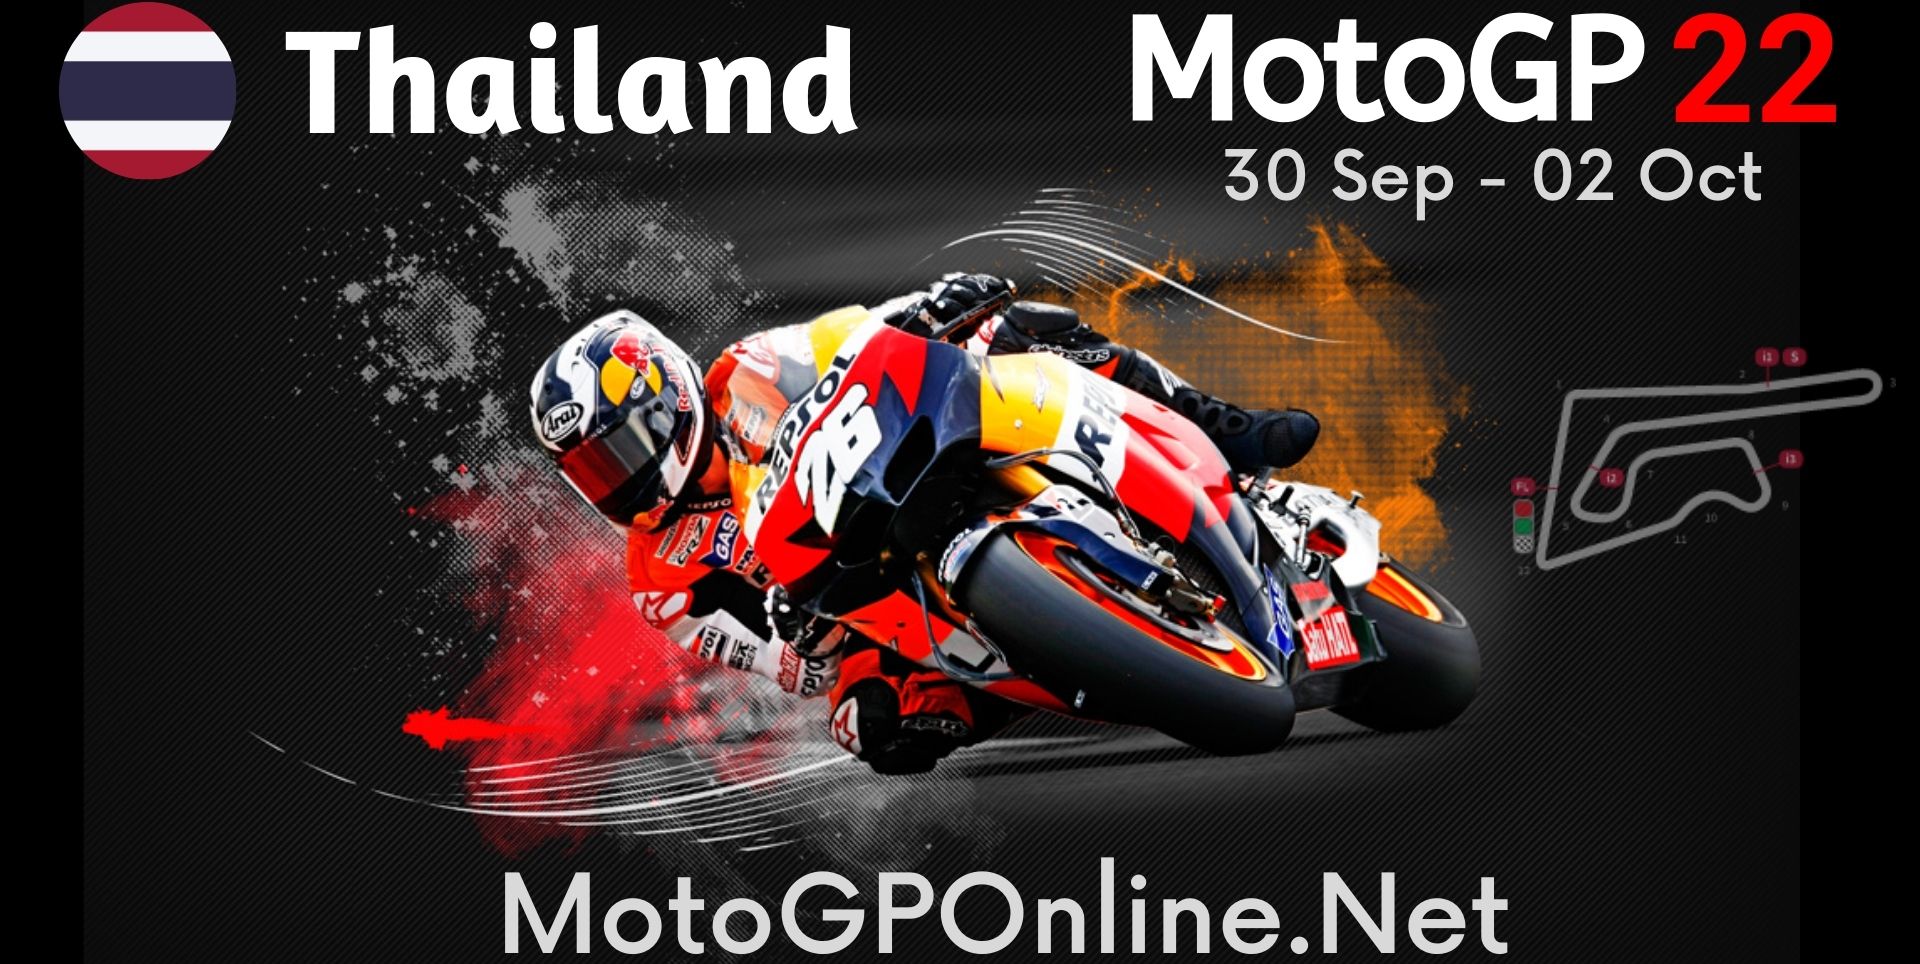 motogp-thailand-2018-race-live-stream